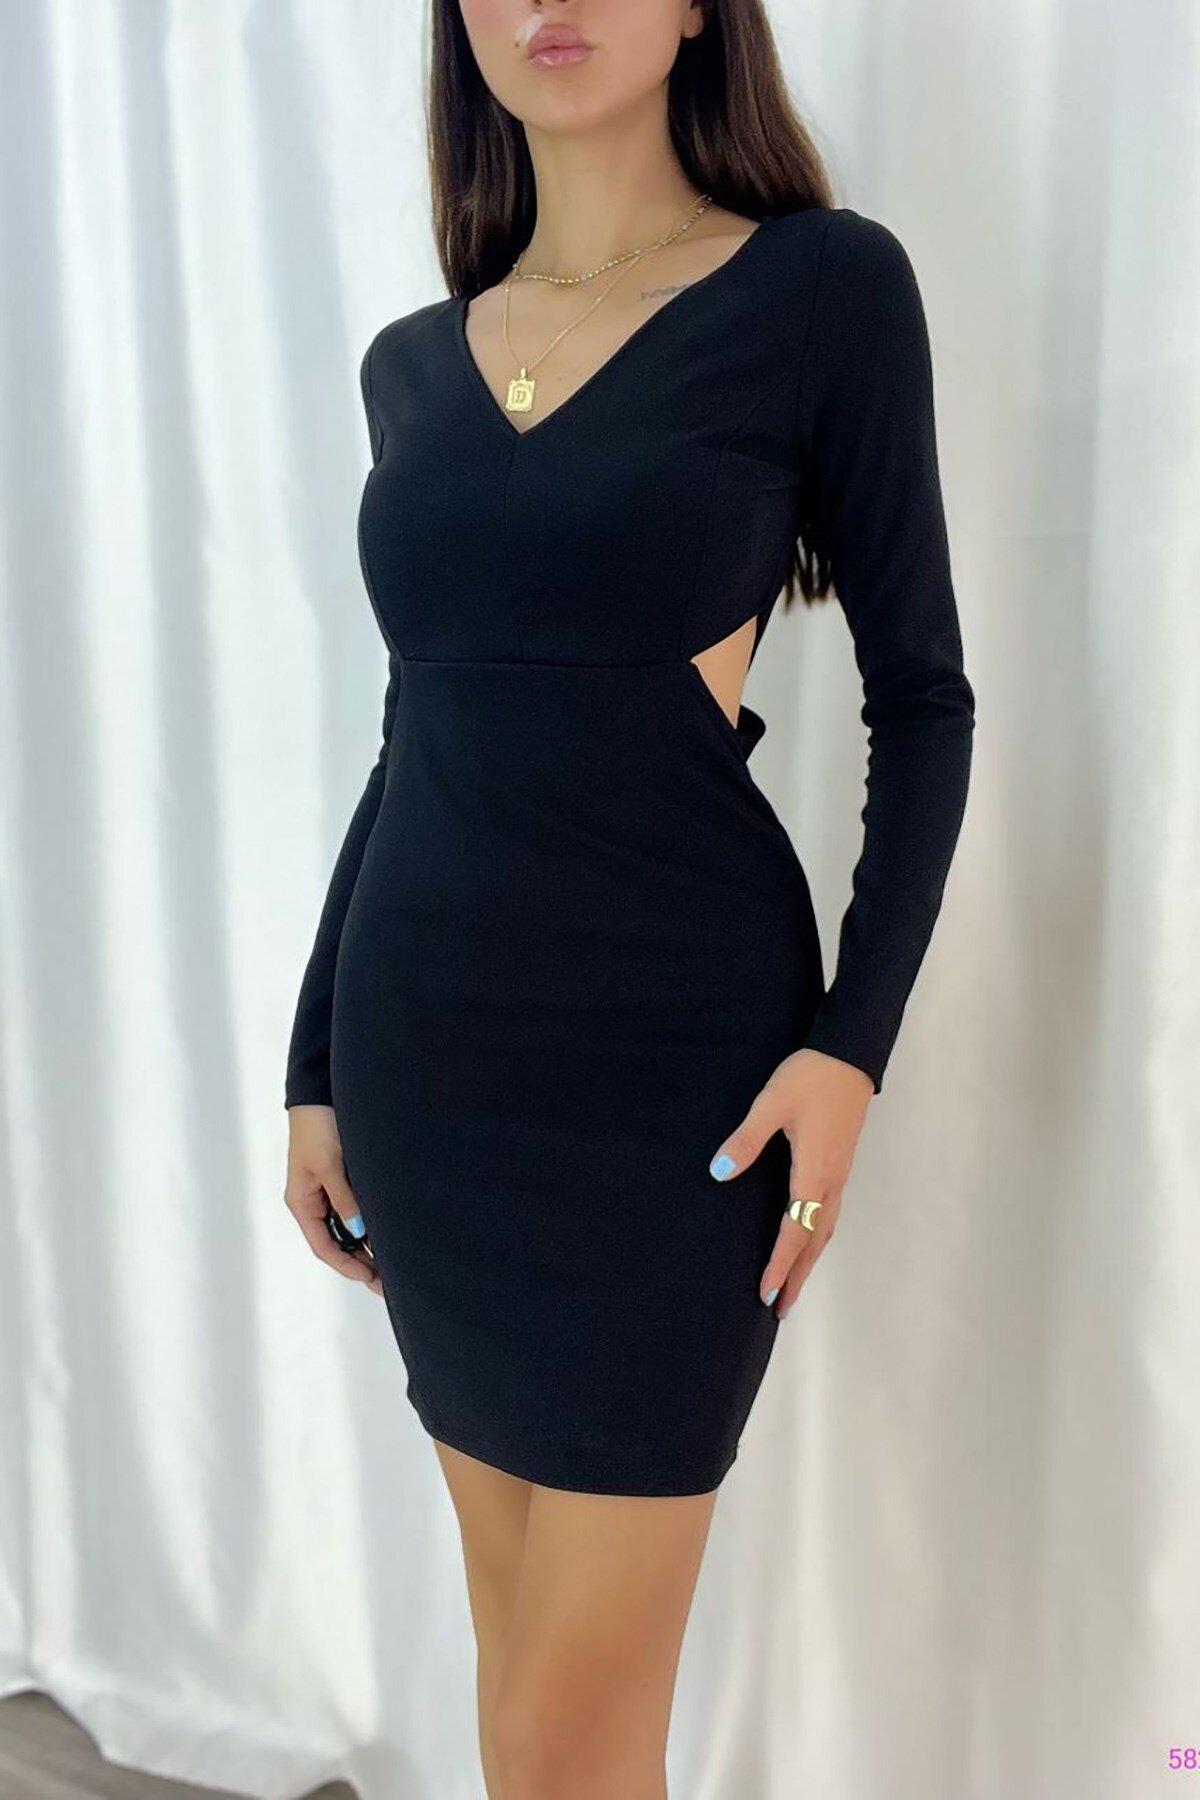 Deafox Siyah İthal Krep Kumaş Uzun Kollu Bel Dekolteli Mini Elbise